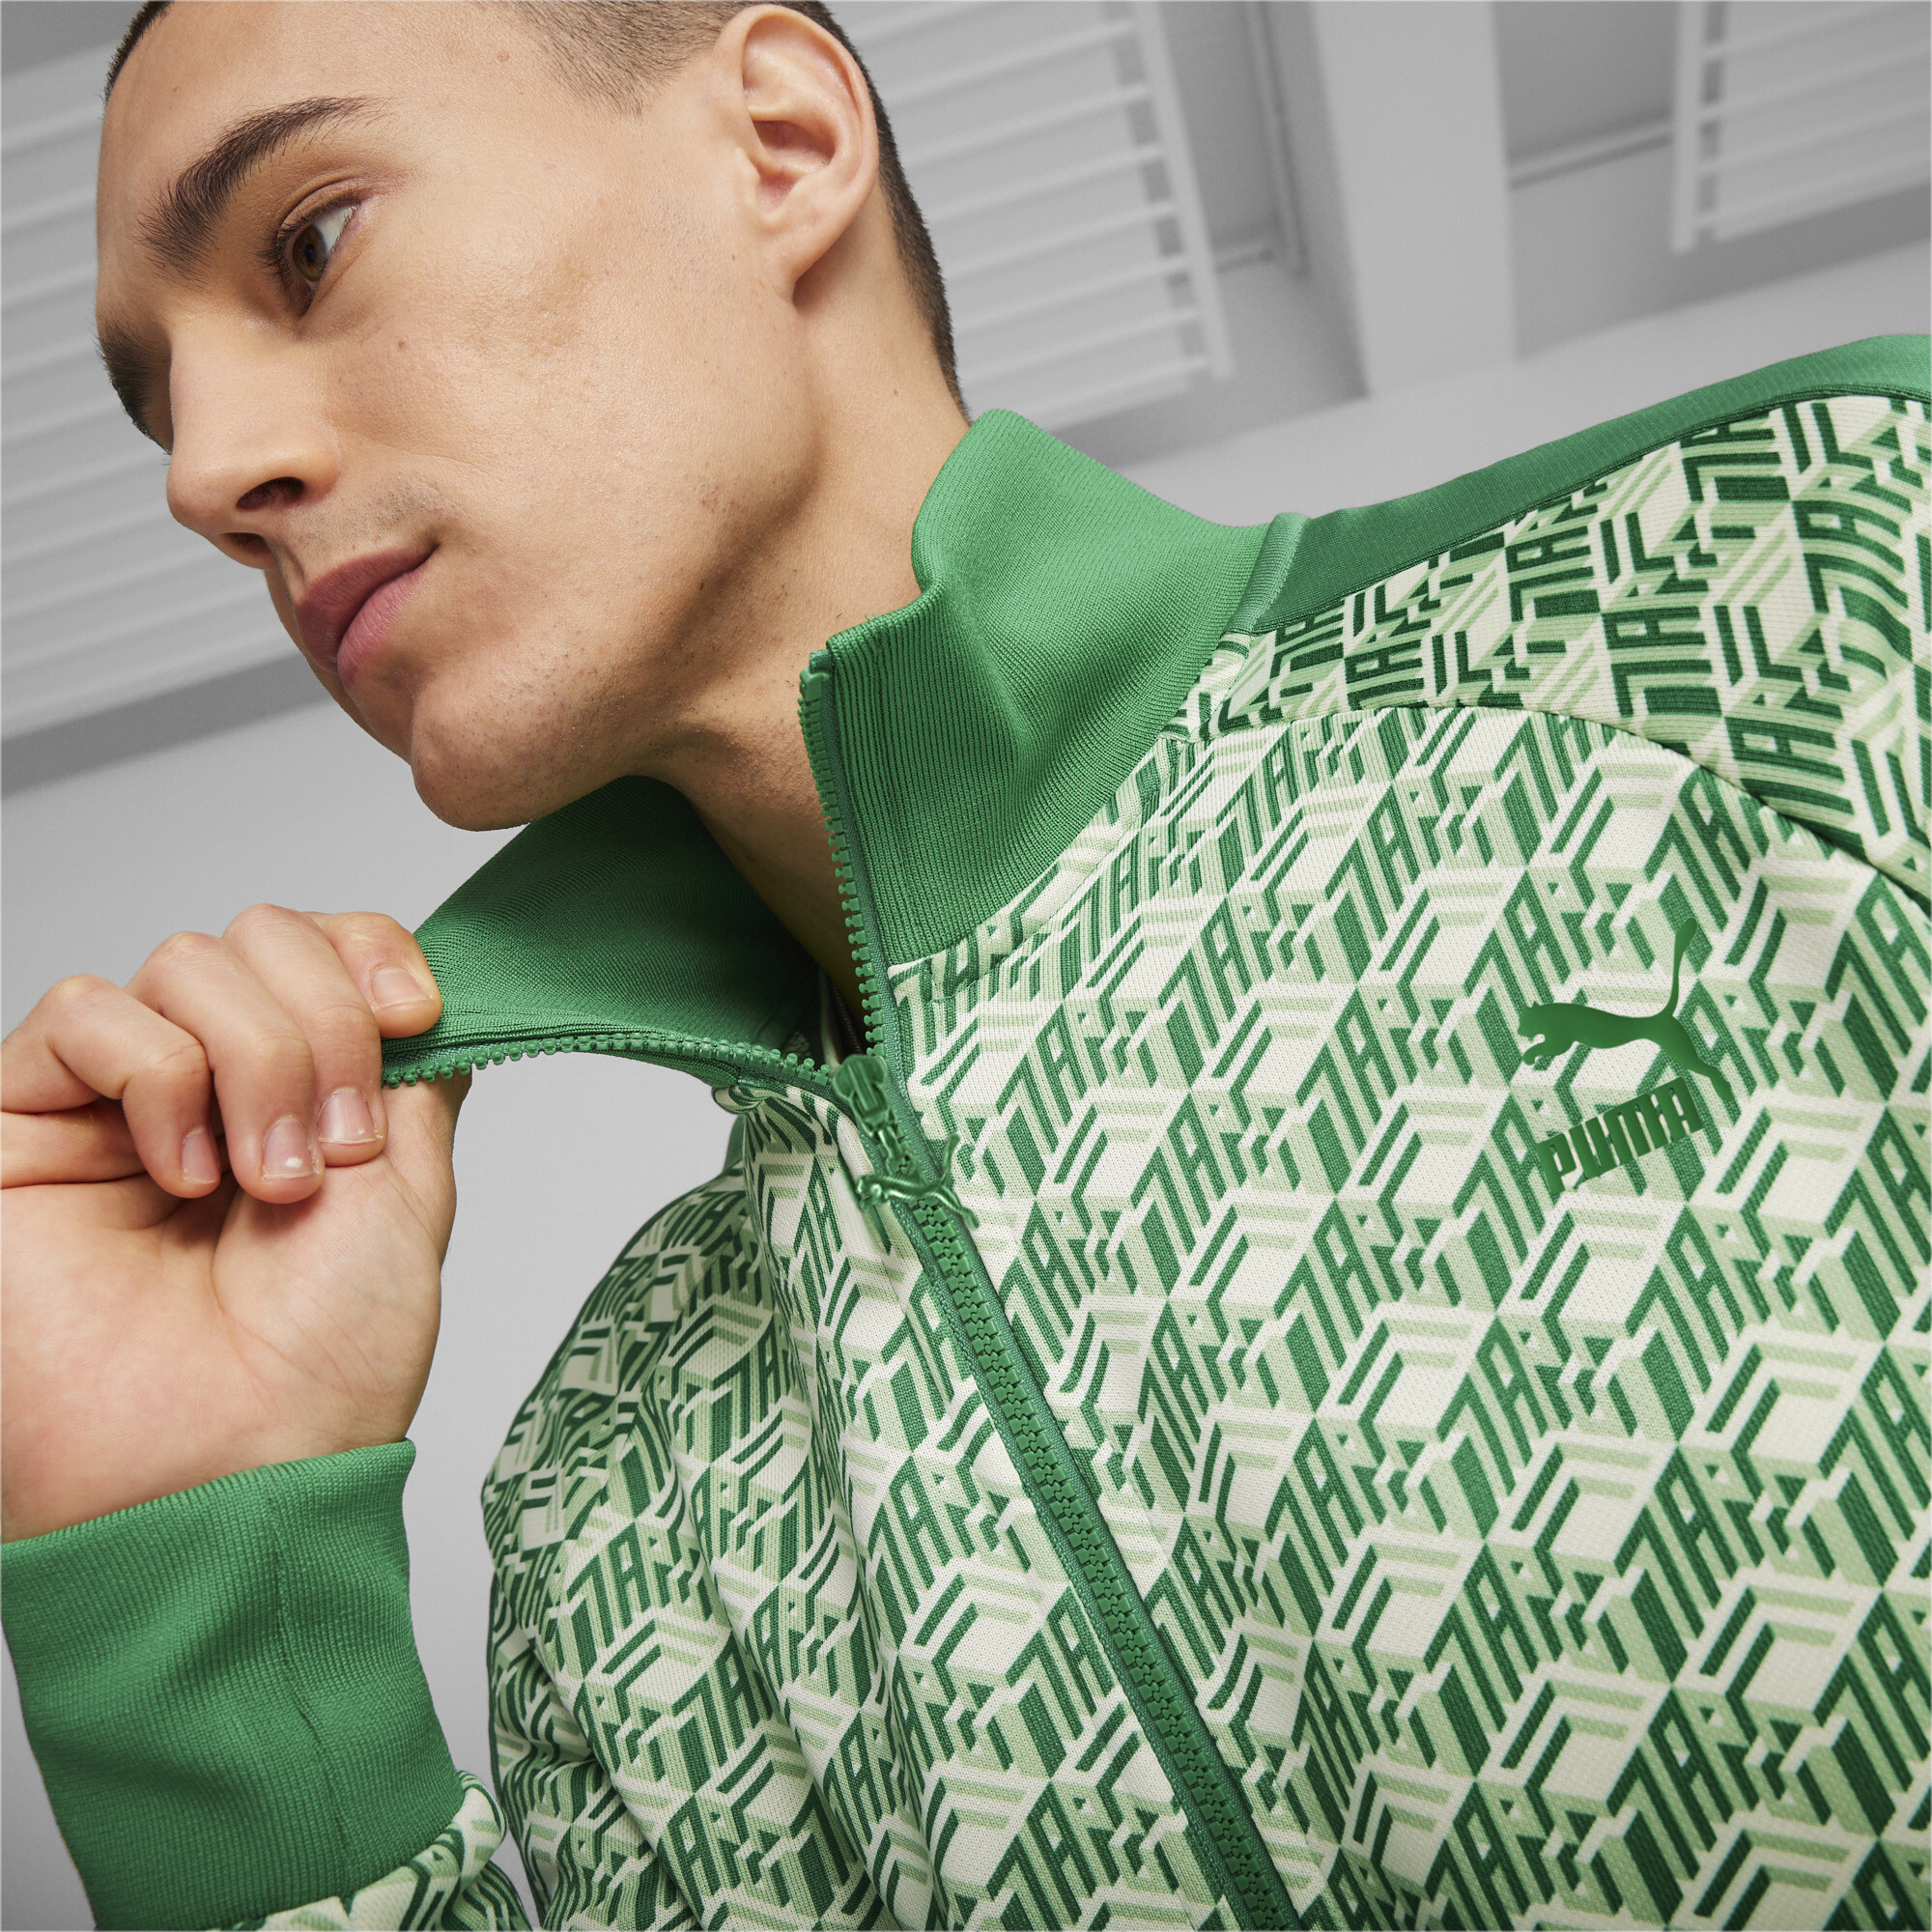 Men's Puma T7's Track Jacket, Green, Size M, Clothing